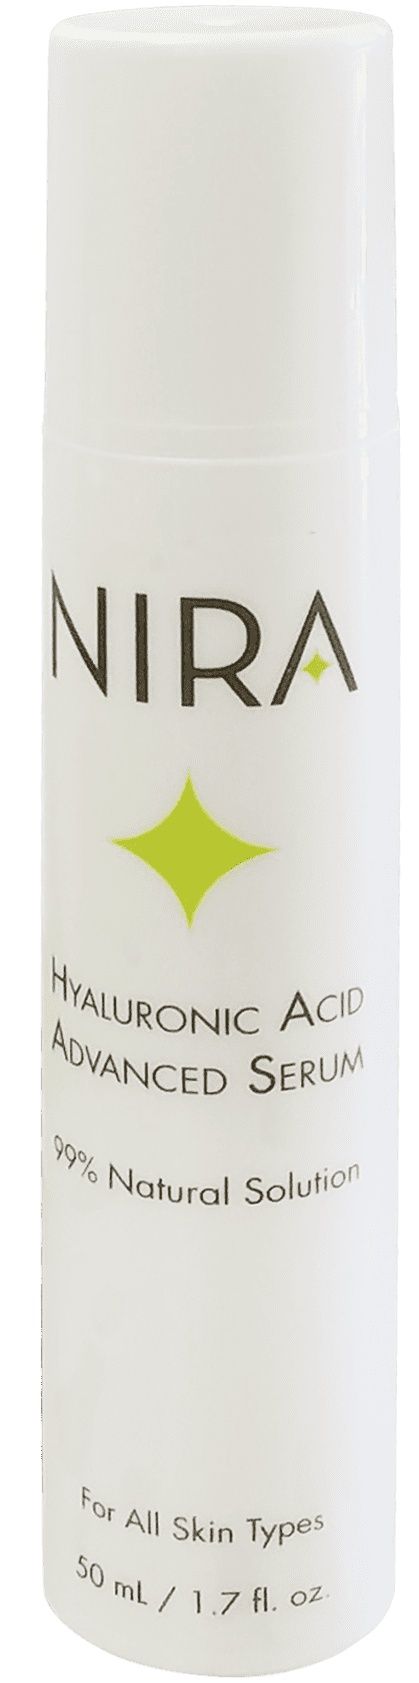 NIRA Hyaluronic Acid Advanced Serum